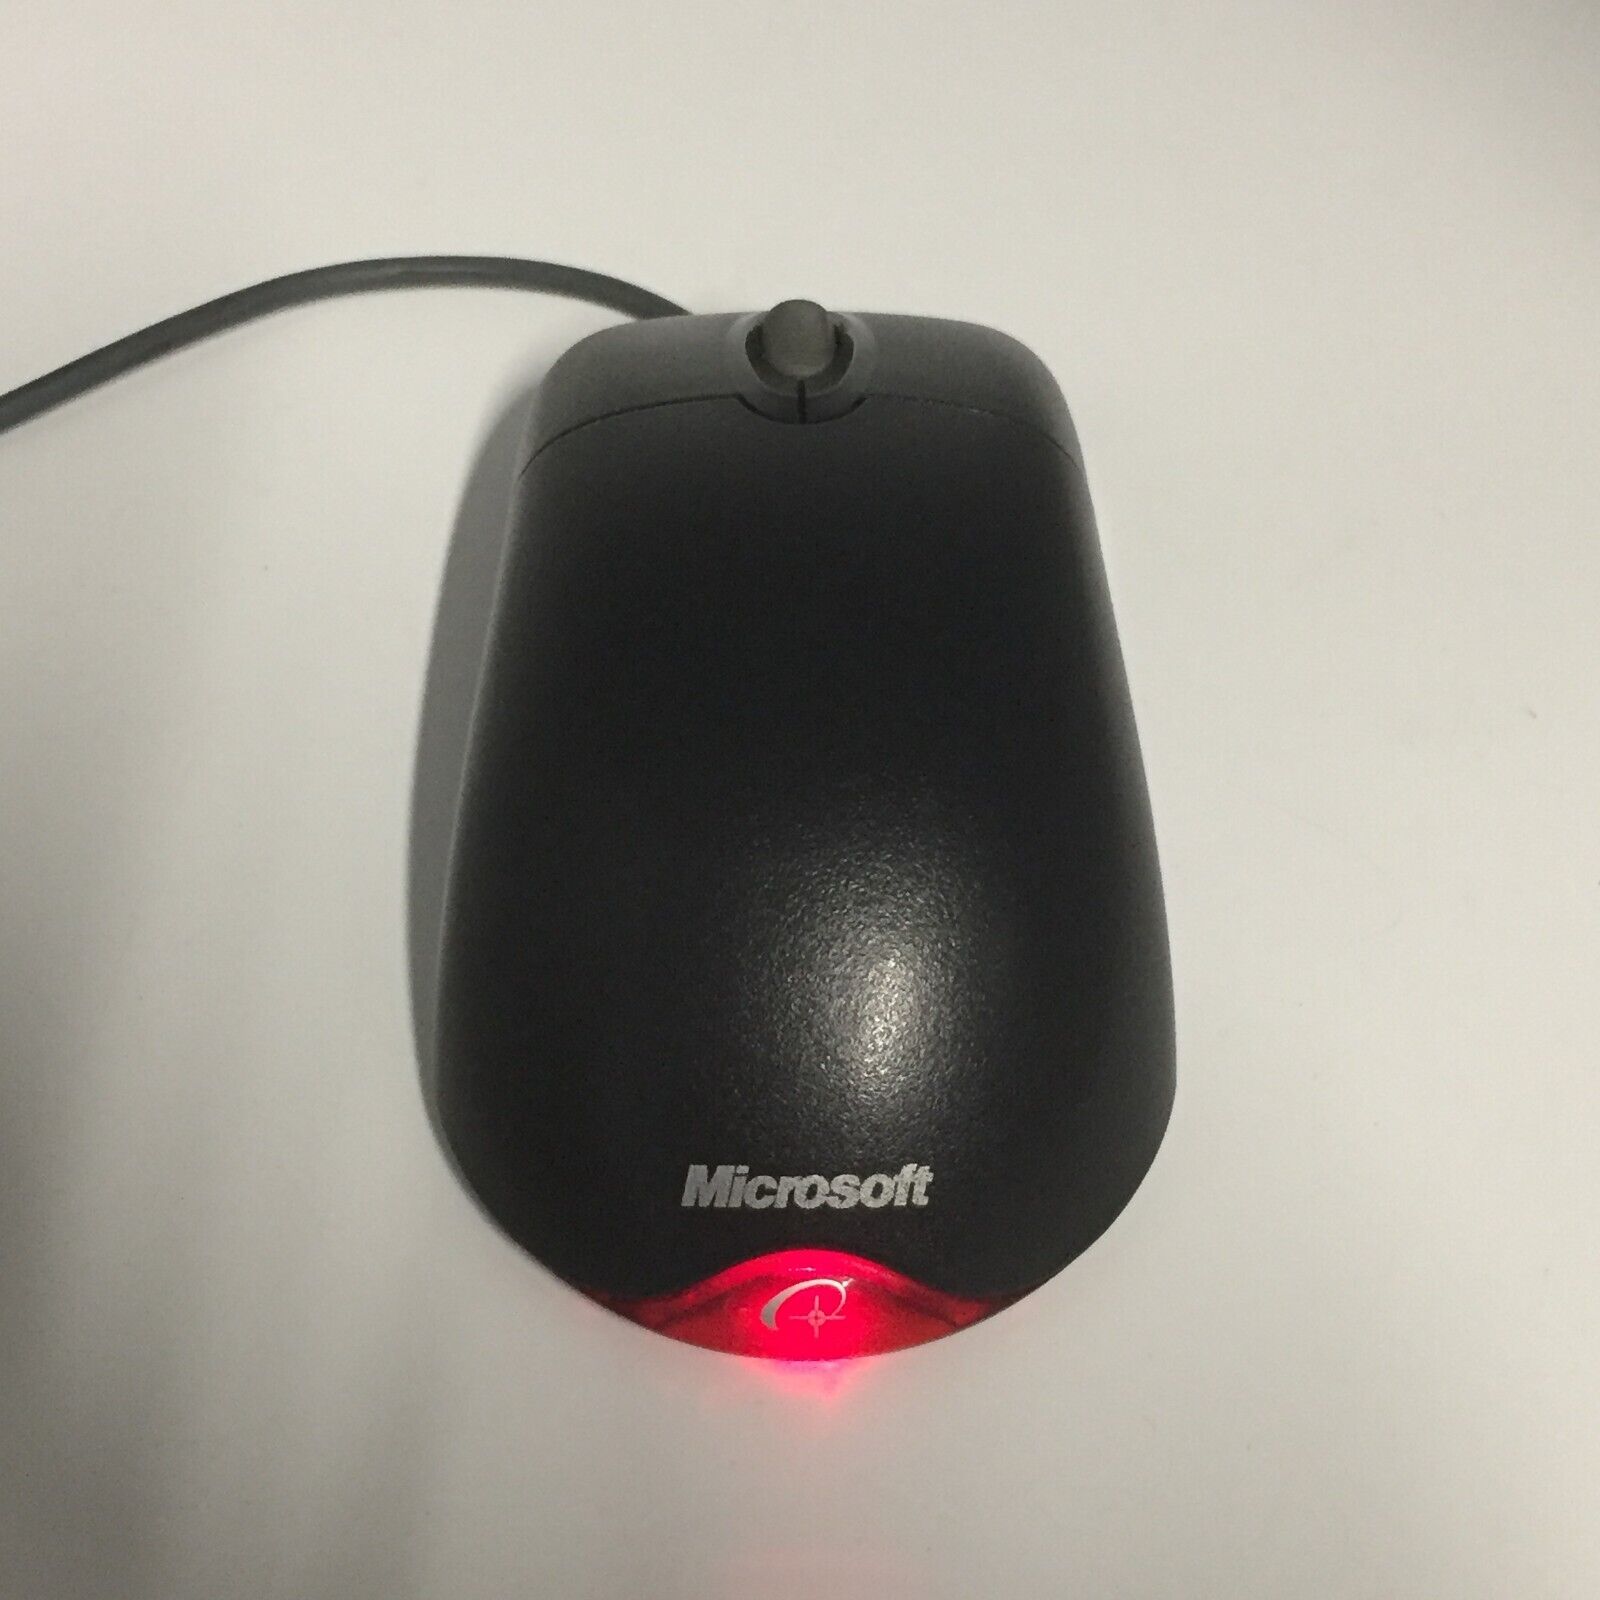 Microsoft Wheel Mouse Optical USB X802382-003 1.1A Black Tested 